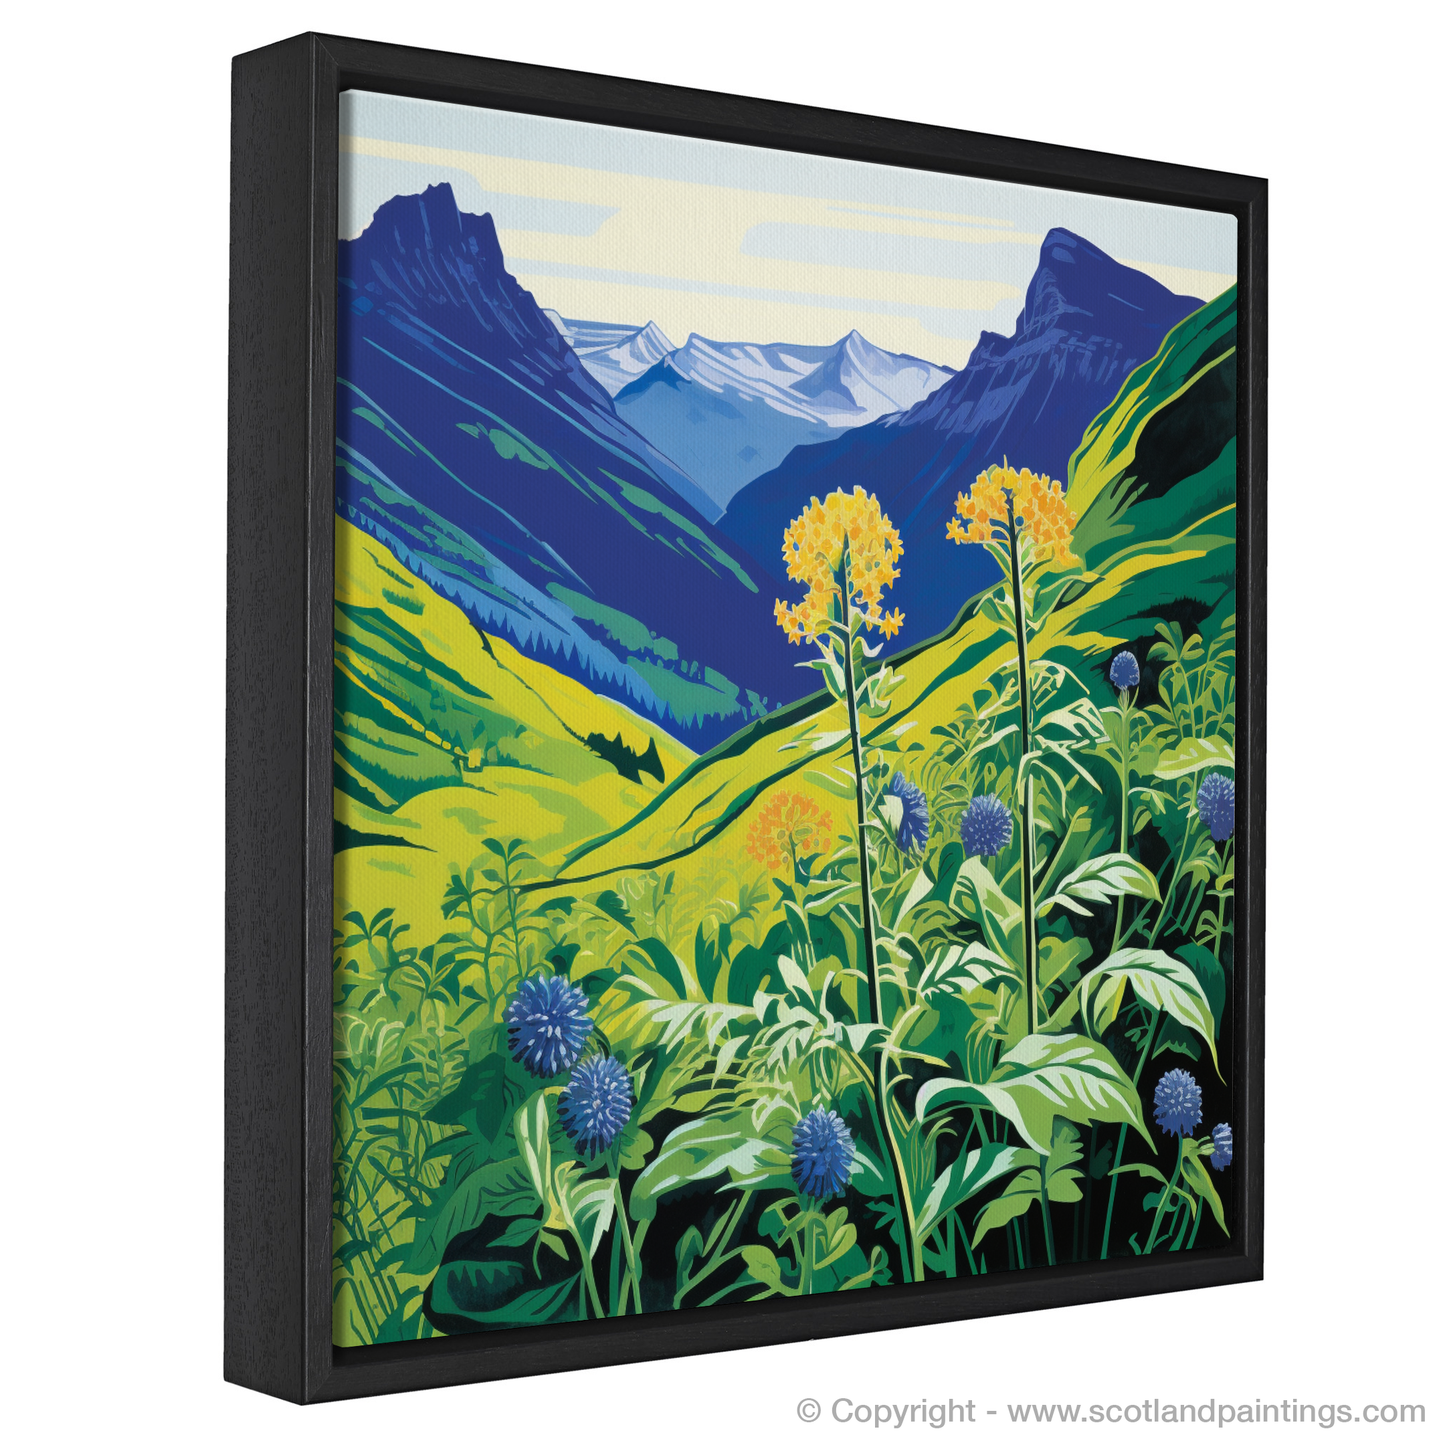 Vibrant Highland Flora: Alpine Lady's-Mantle on Ben Lawers